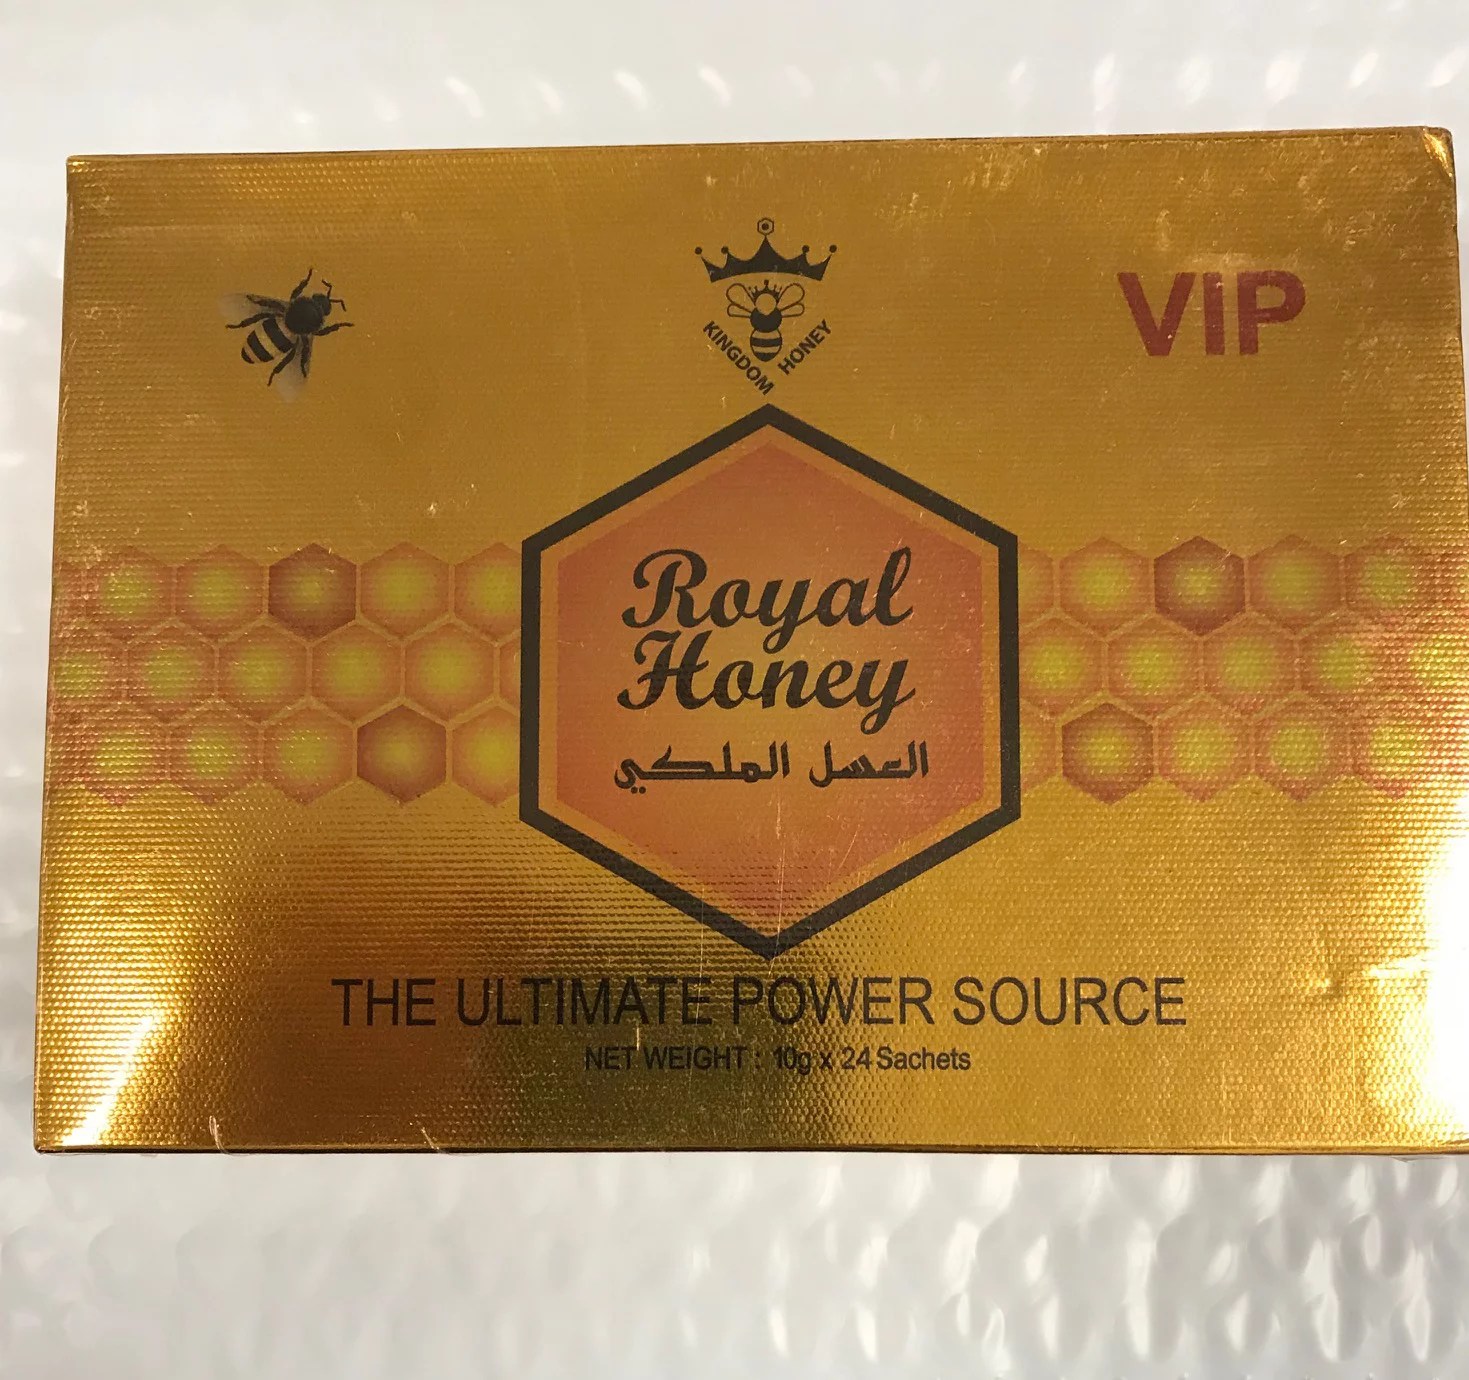 Royal Honey VIP 10g X 24 sachets